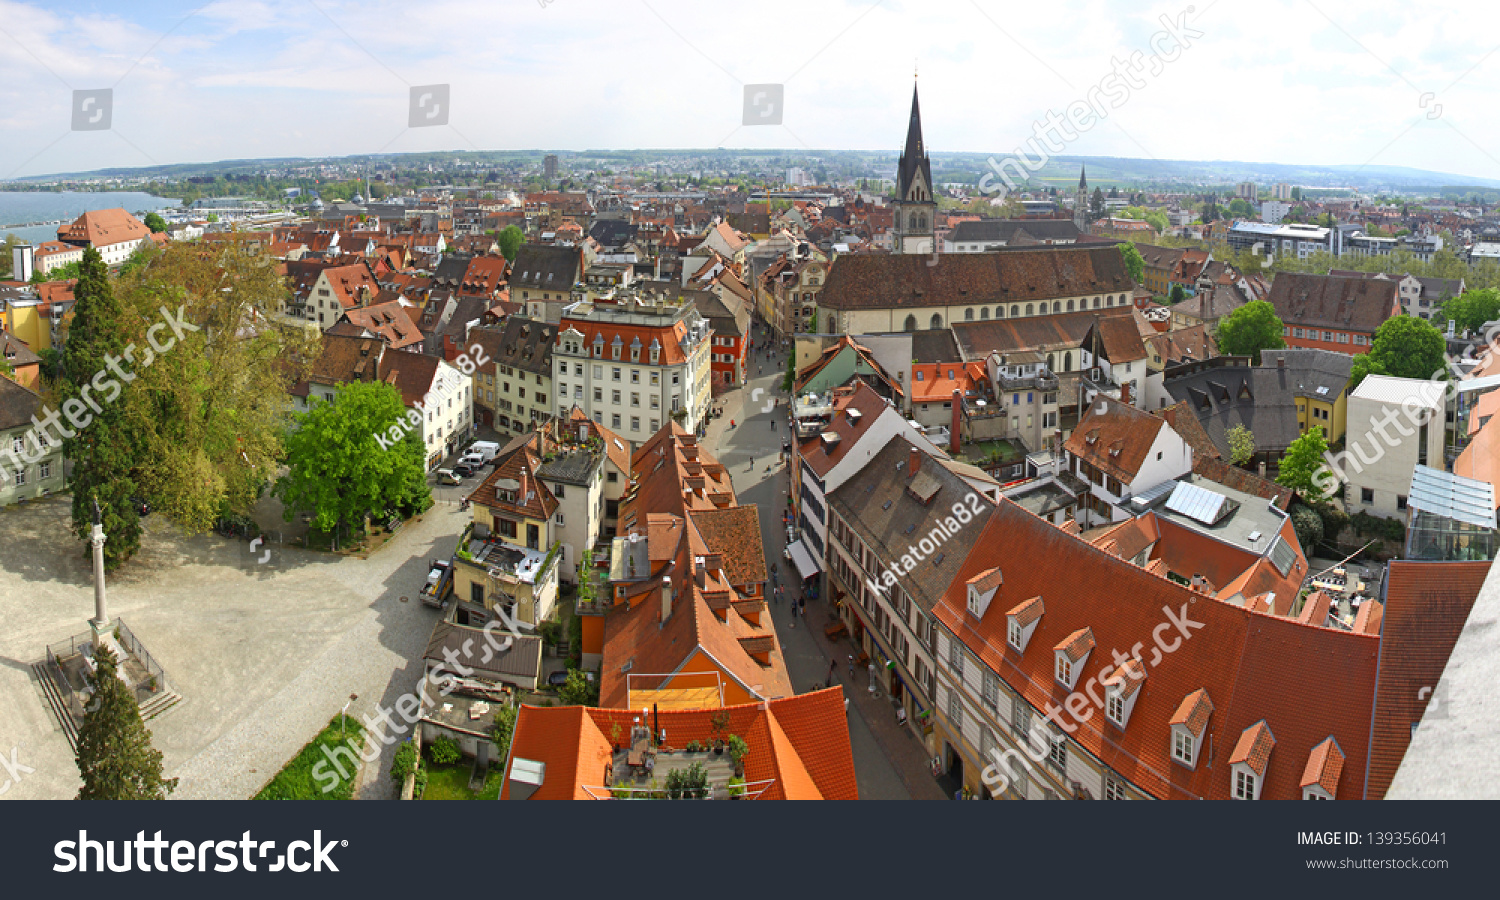 Panoramic view of Konstanz city (Germany) and Town of Kreuzlingen (Switzerland) #139356041